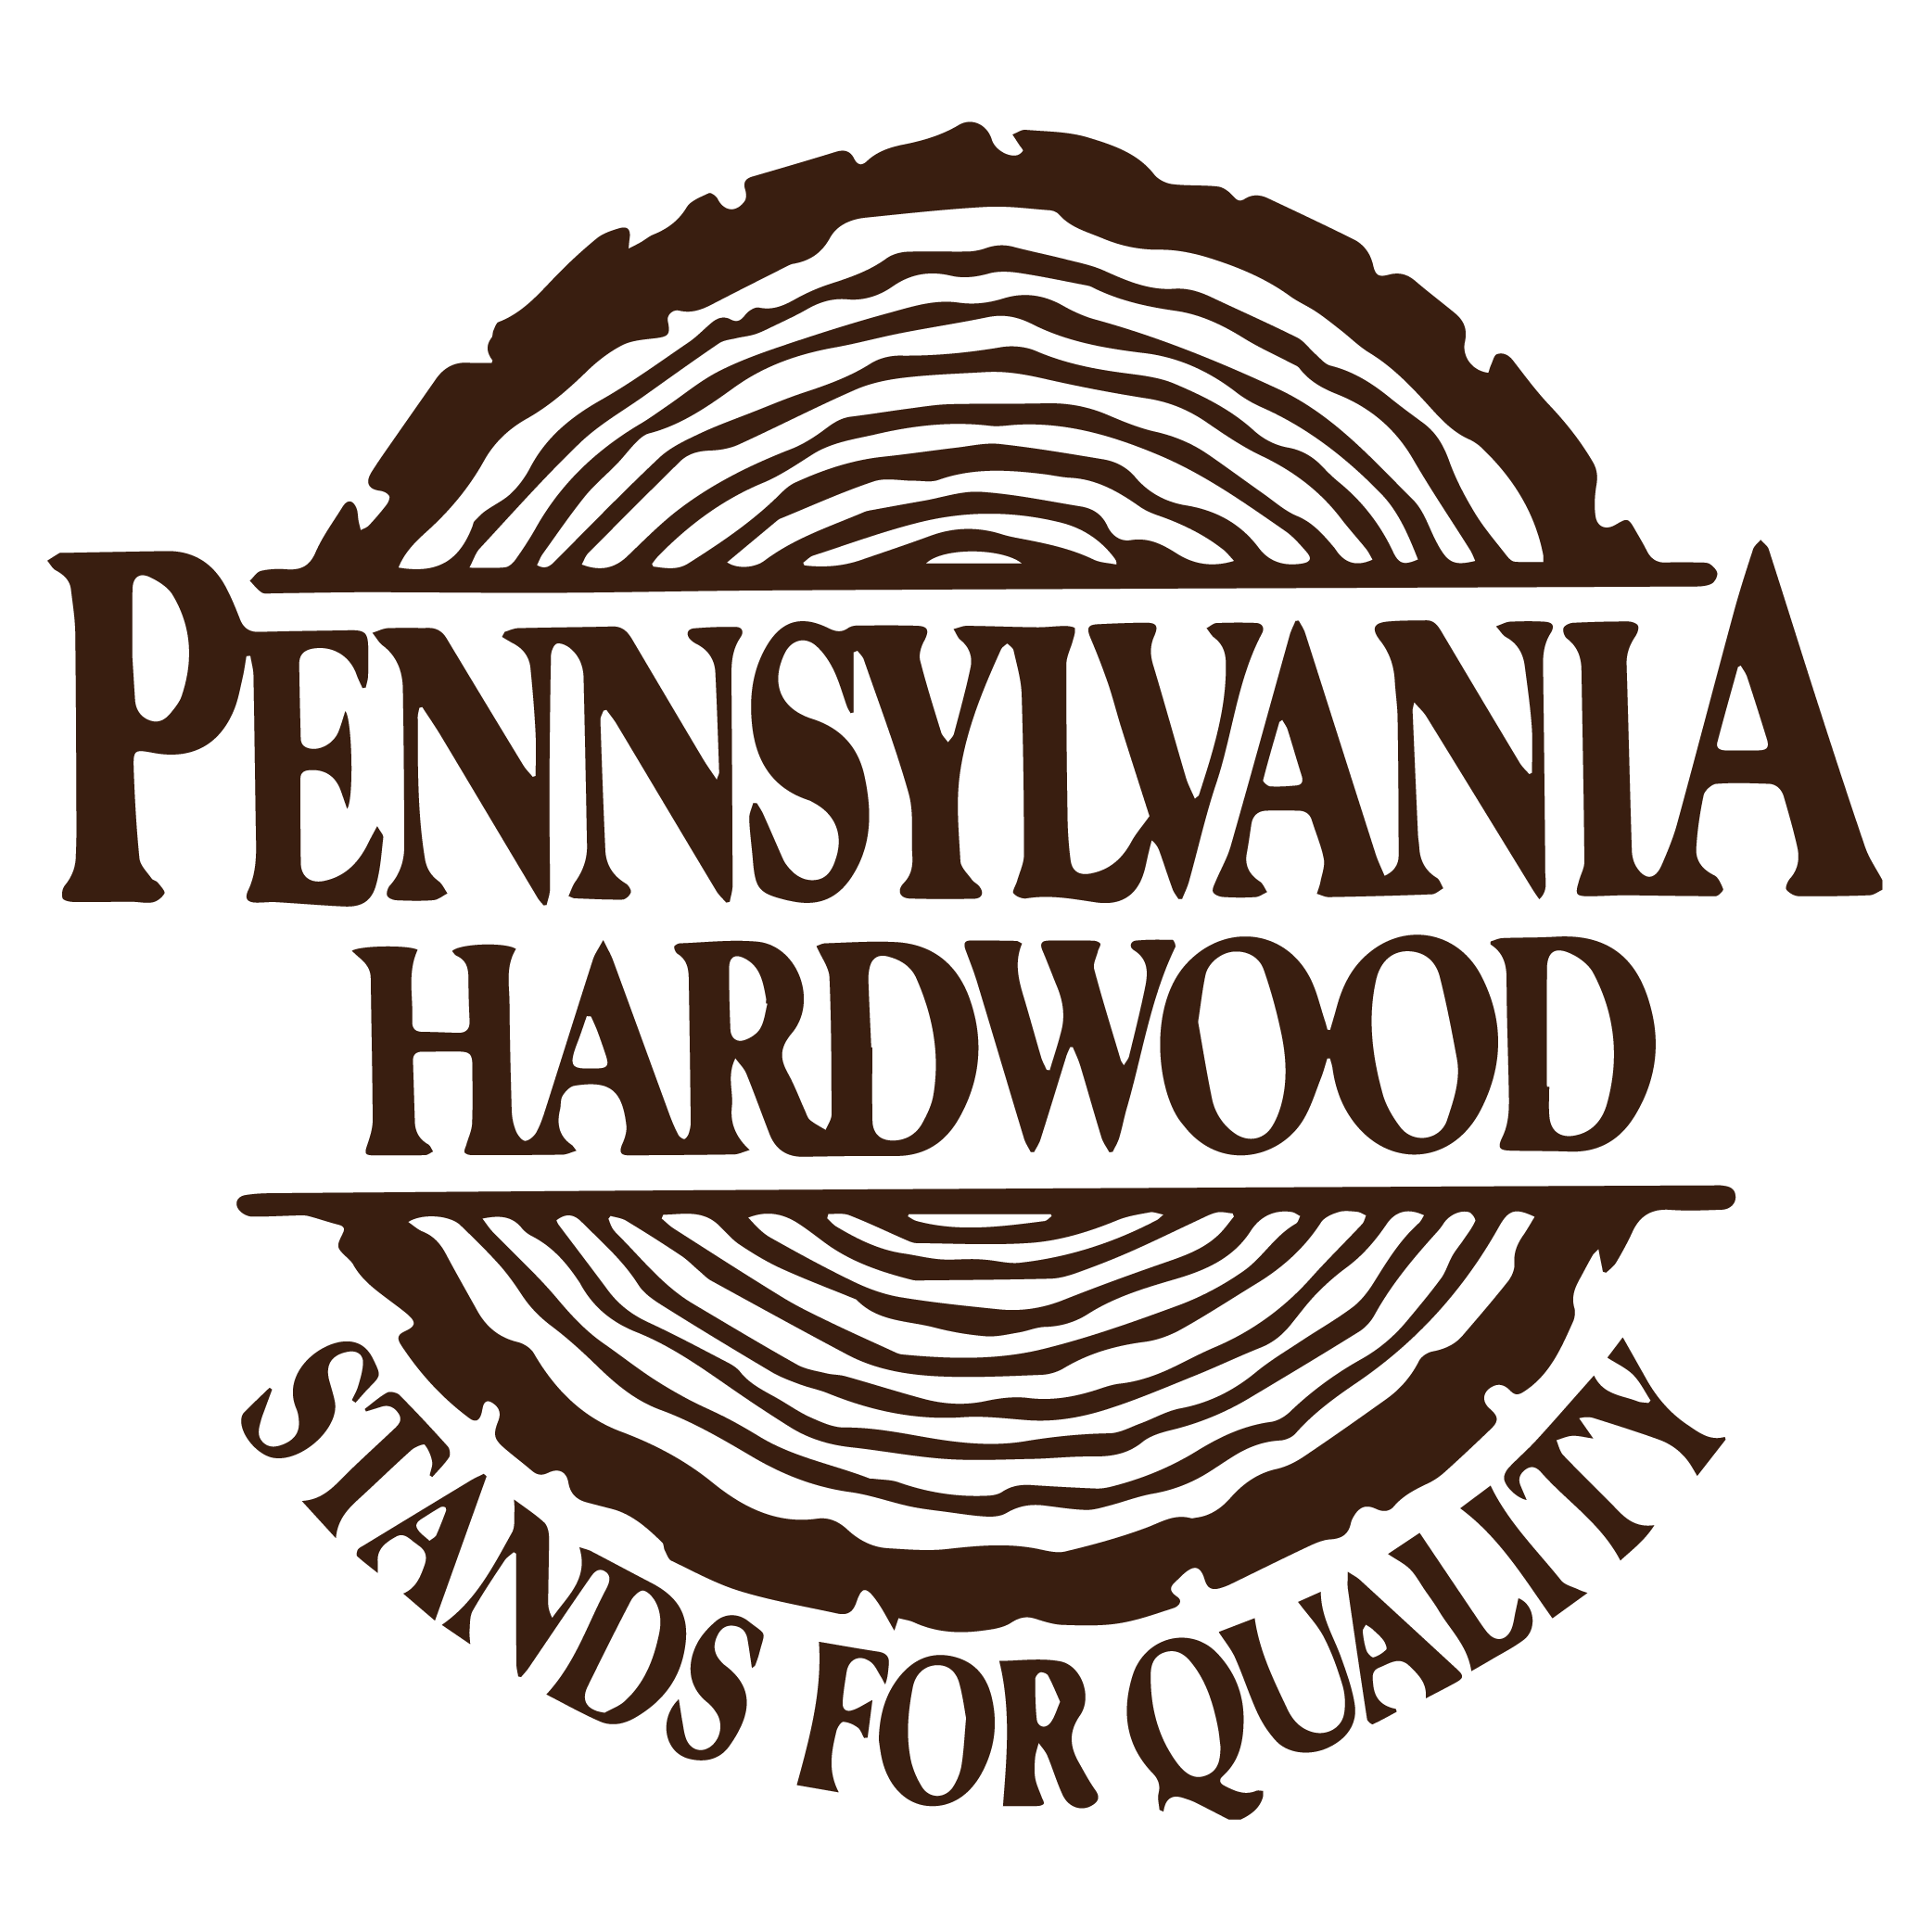 Pennsylvania Hardwood